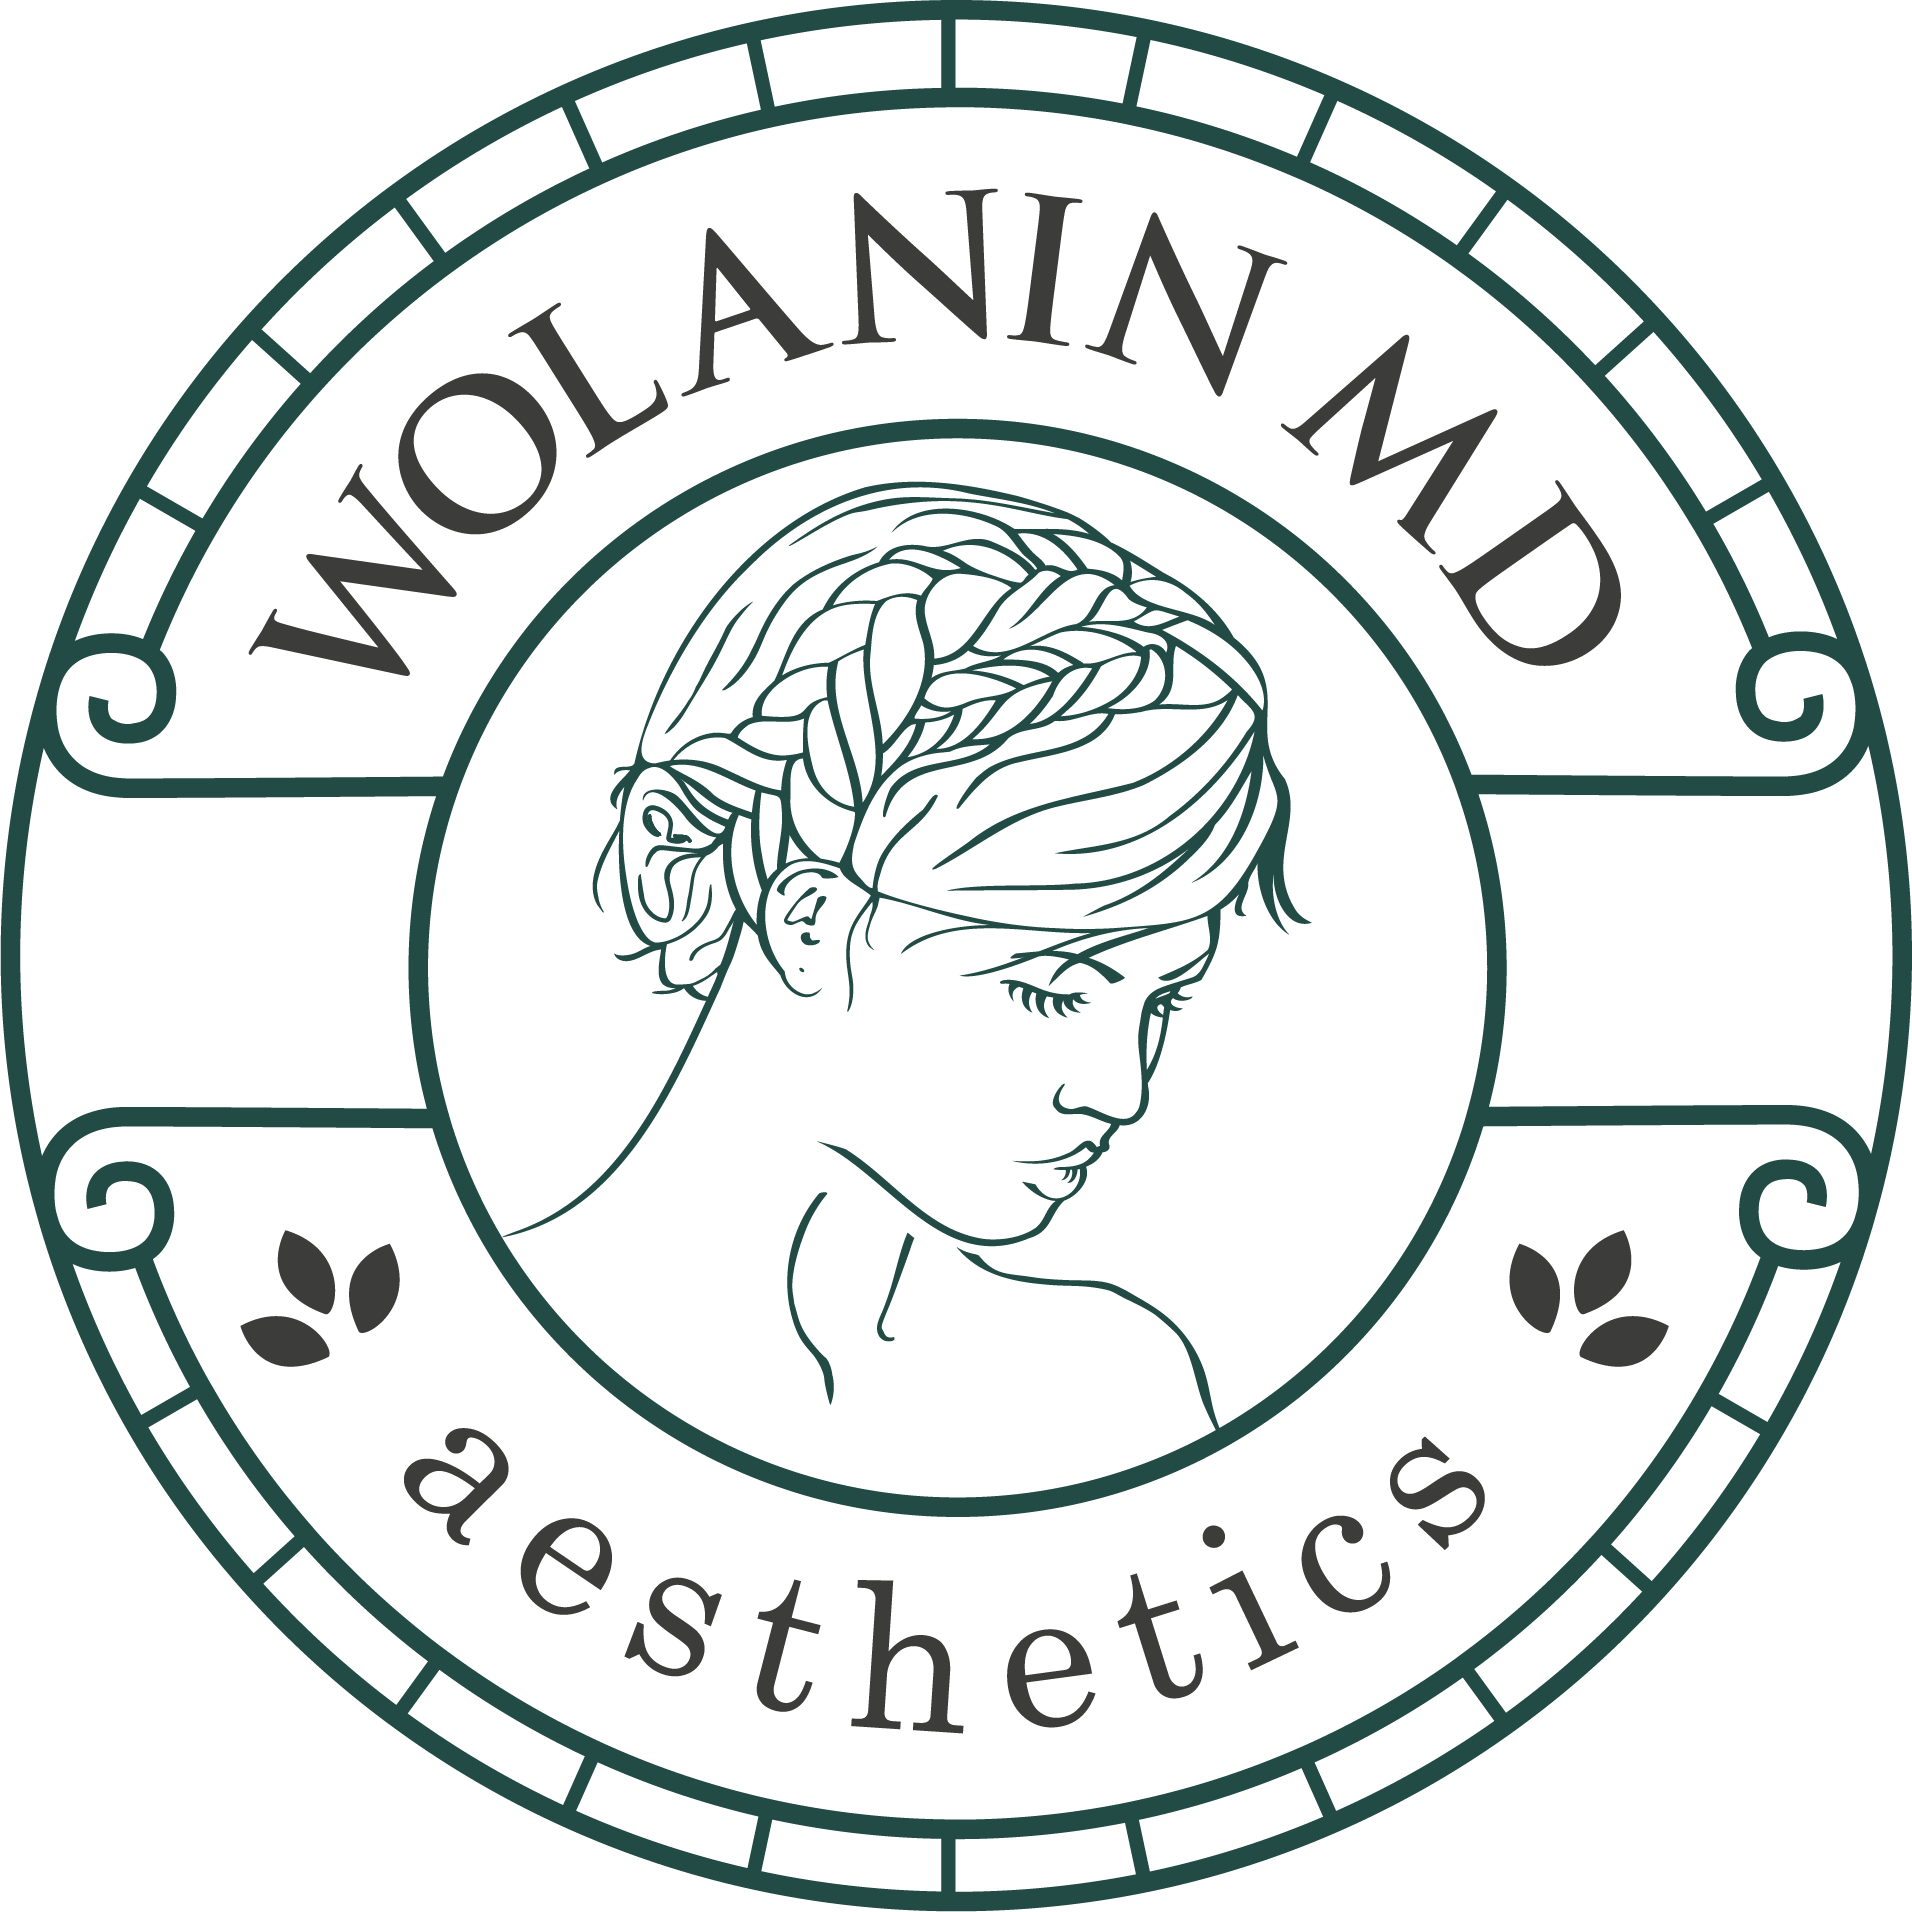 Wolanin MD - Aesthetics